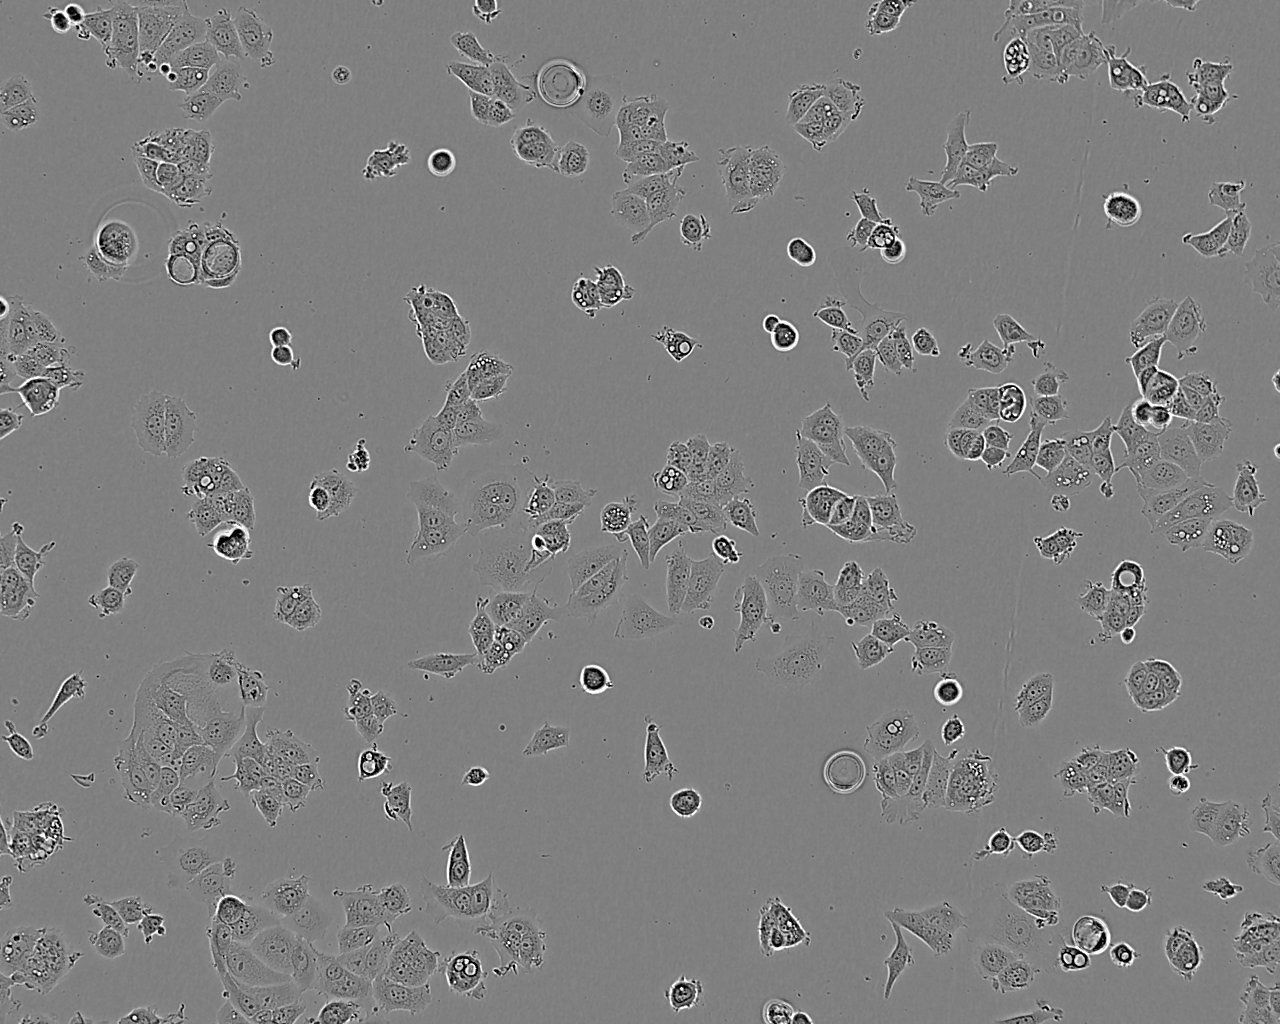 NCI-H1770 epithelioid cells人非小细胞肺癌细胞系,NCI-H1770 epithelioid cells